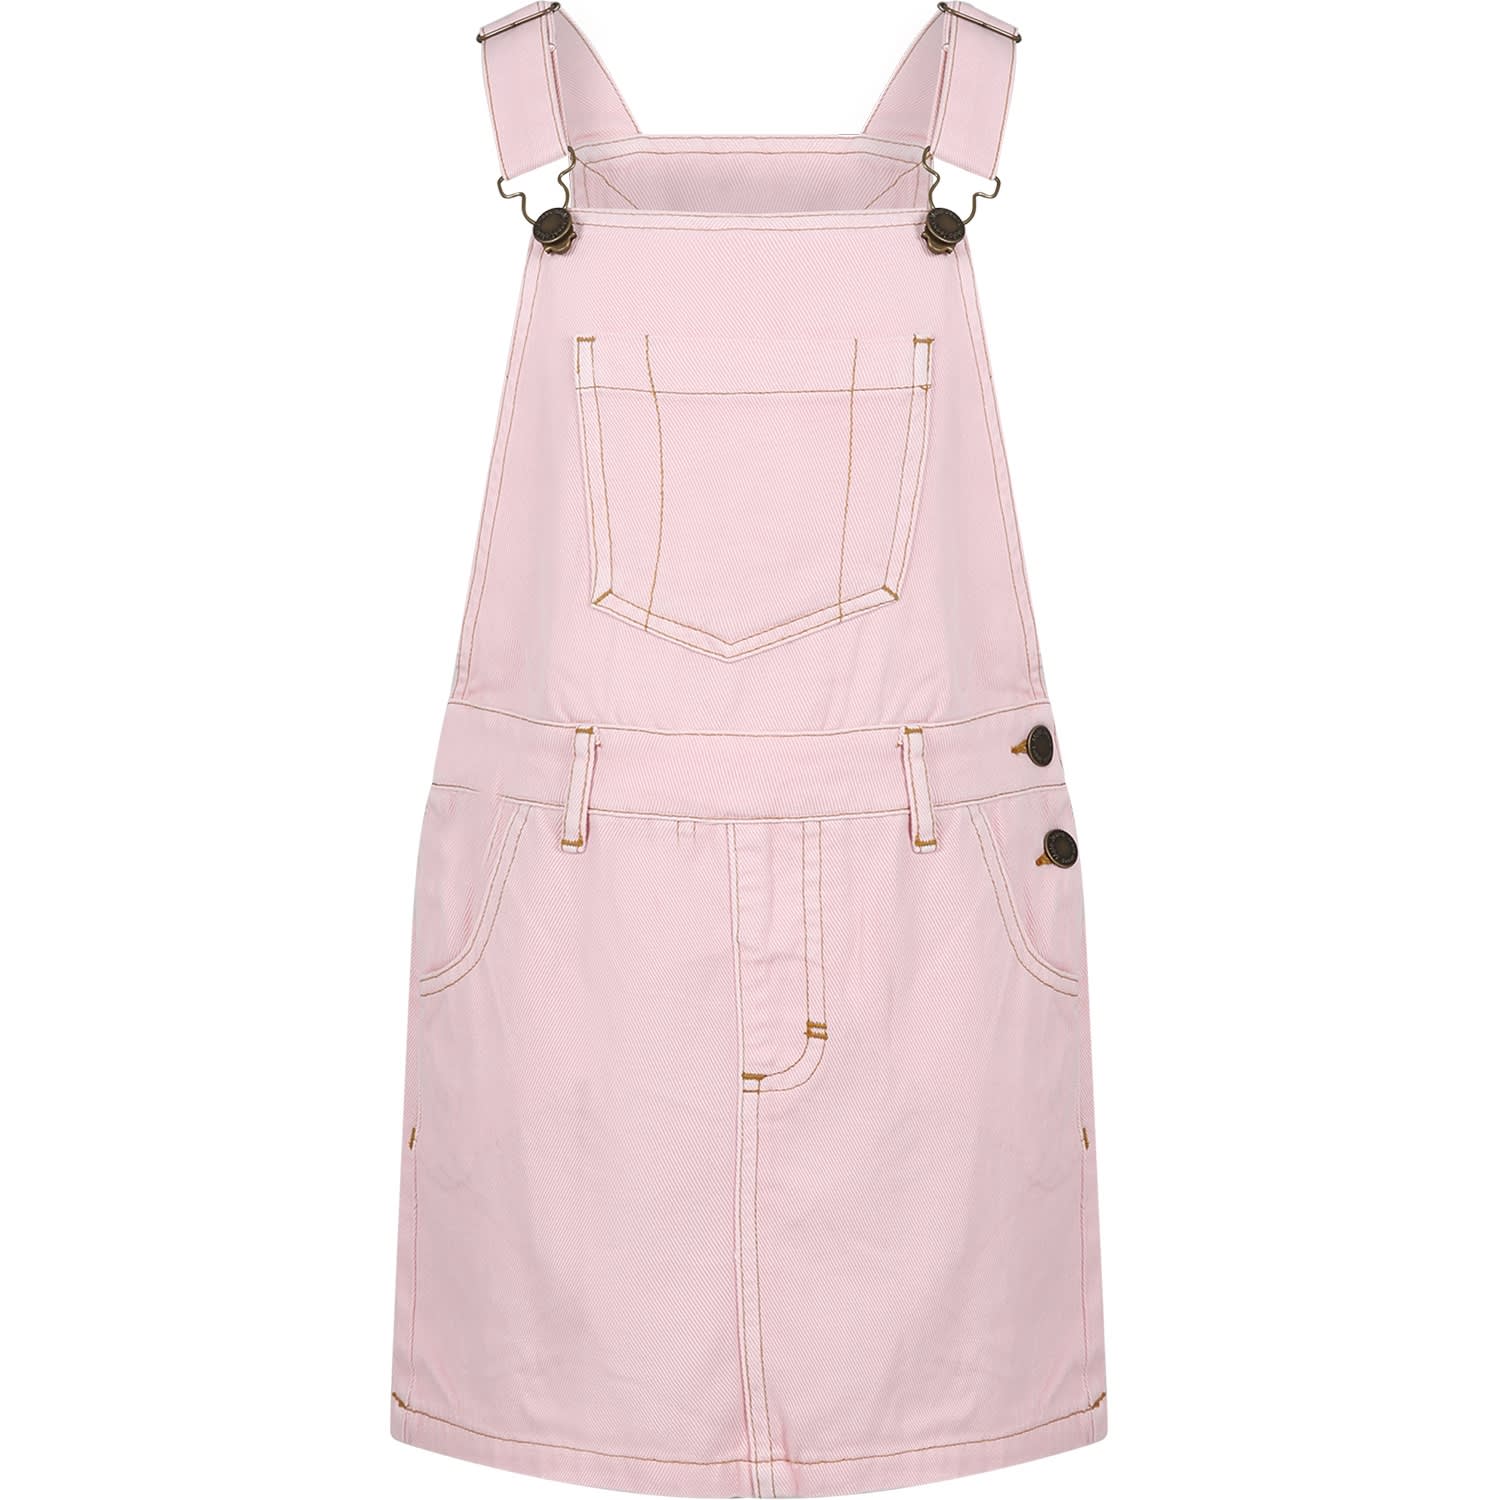 Molo Kids' Pink Skirt For Girl With Logo